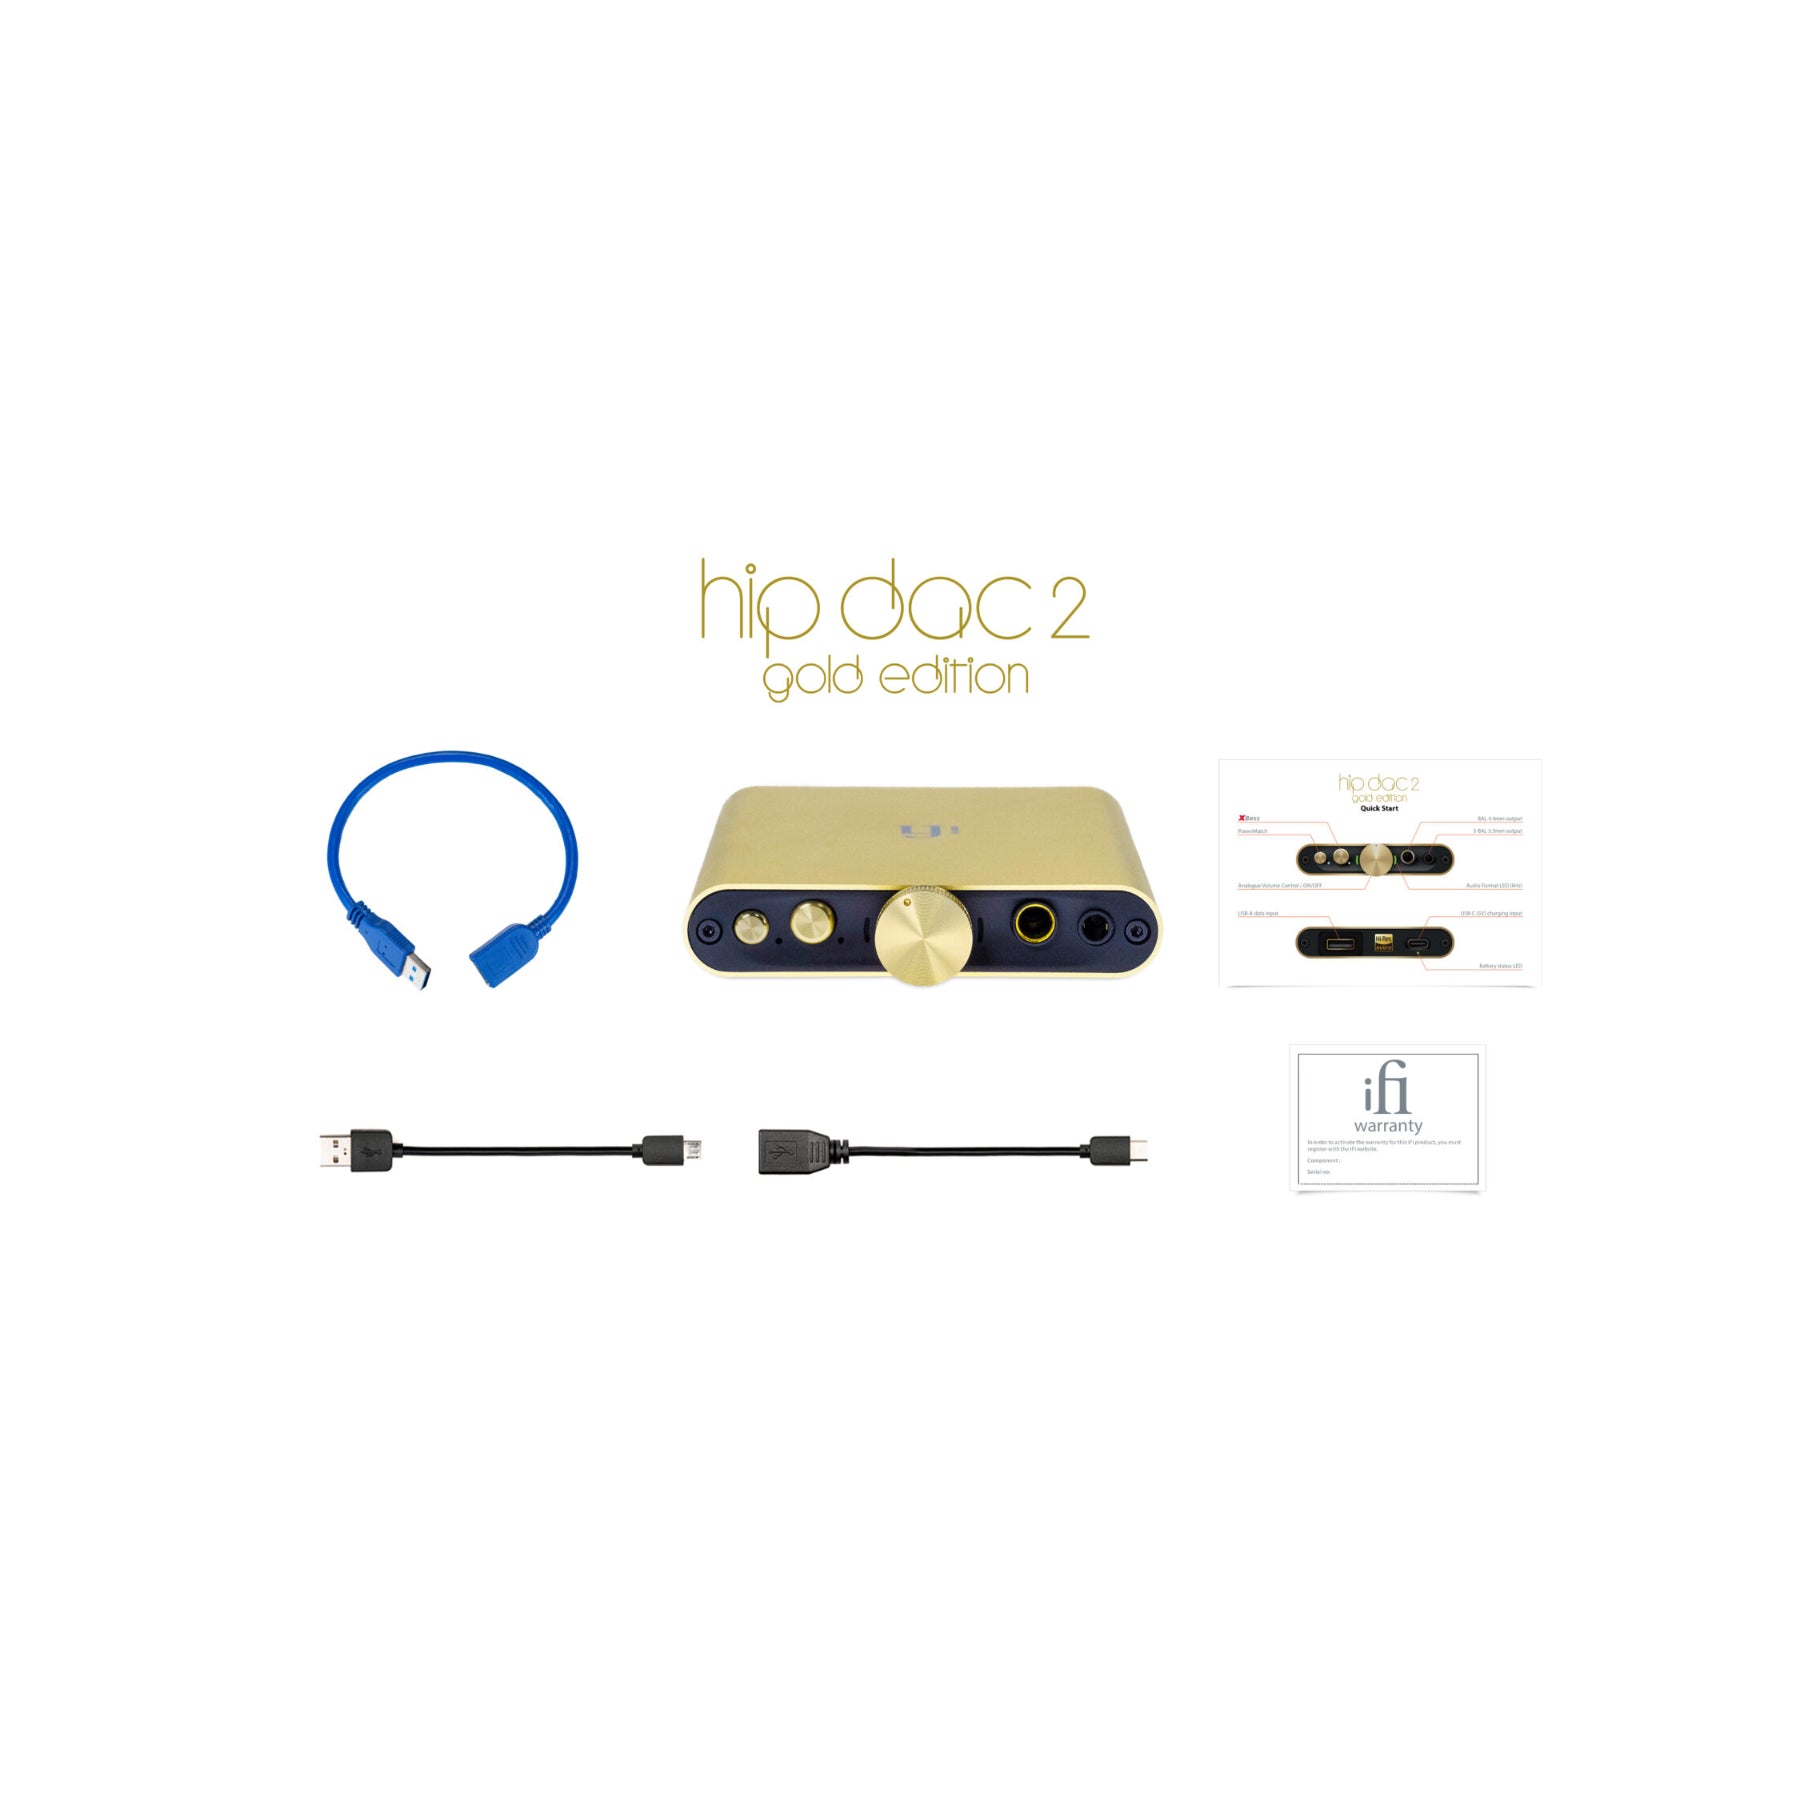 iFi Hip-Dac2 - Portable Balanced DAC/AMP Limited Gold Edition